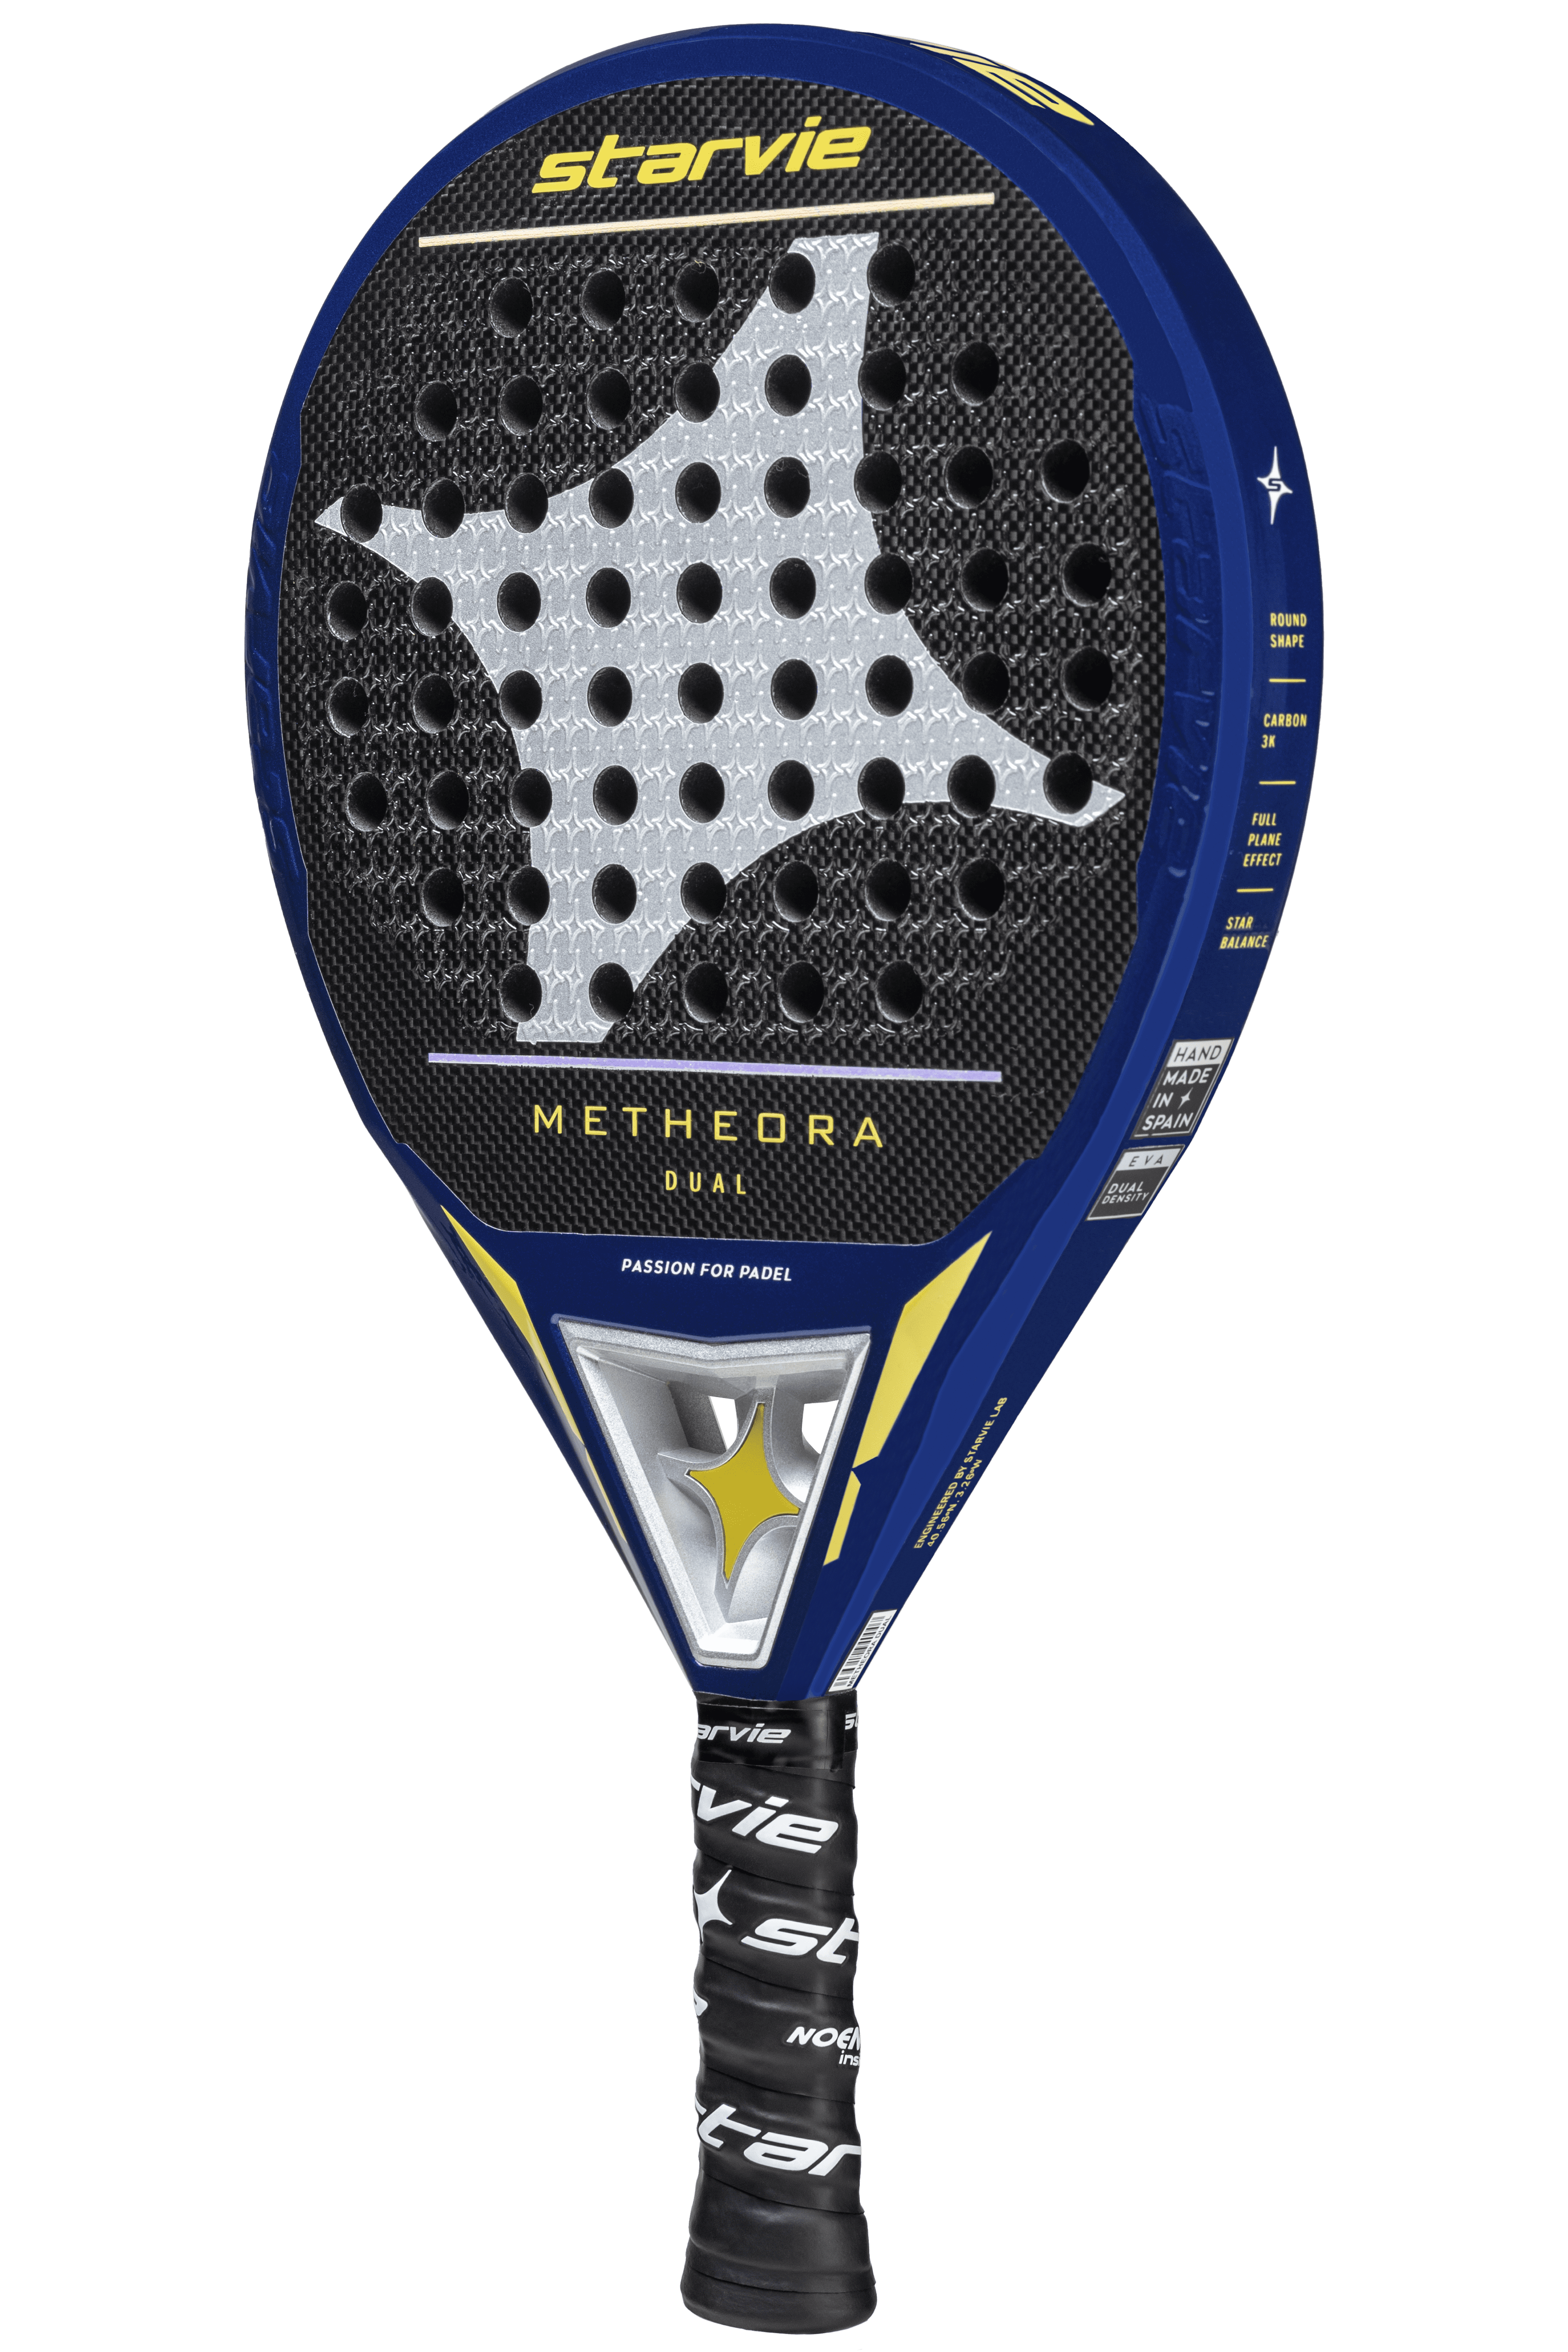 ANTI SHOCK BEACH TENNIS & PADEL GRIP, vibration, paddle tennis